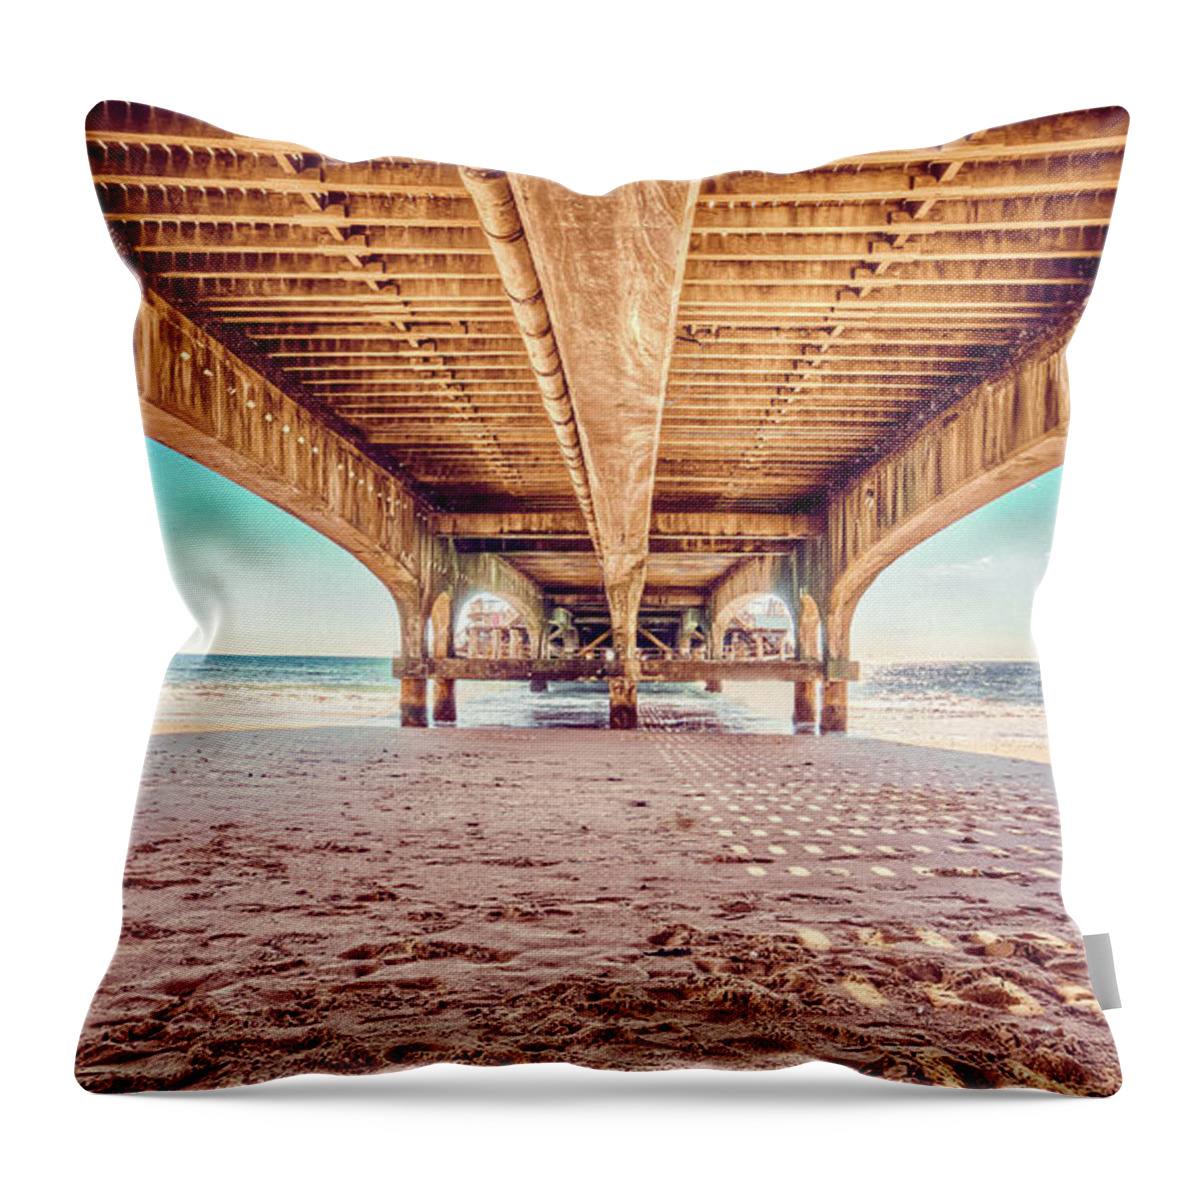 Beach Throw Pillow featuring the photograph Under The Wooden Piear On A Sand Beach Art by Wall Art Prints